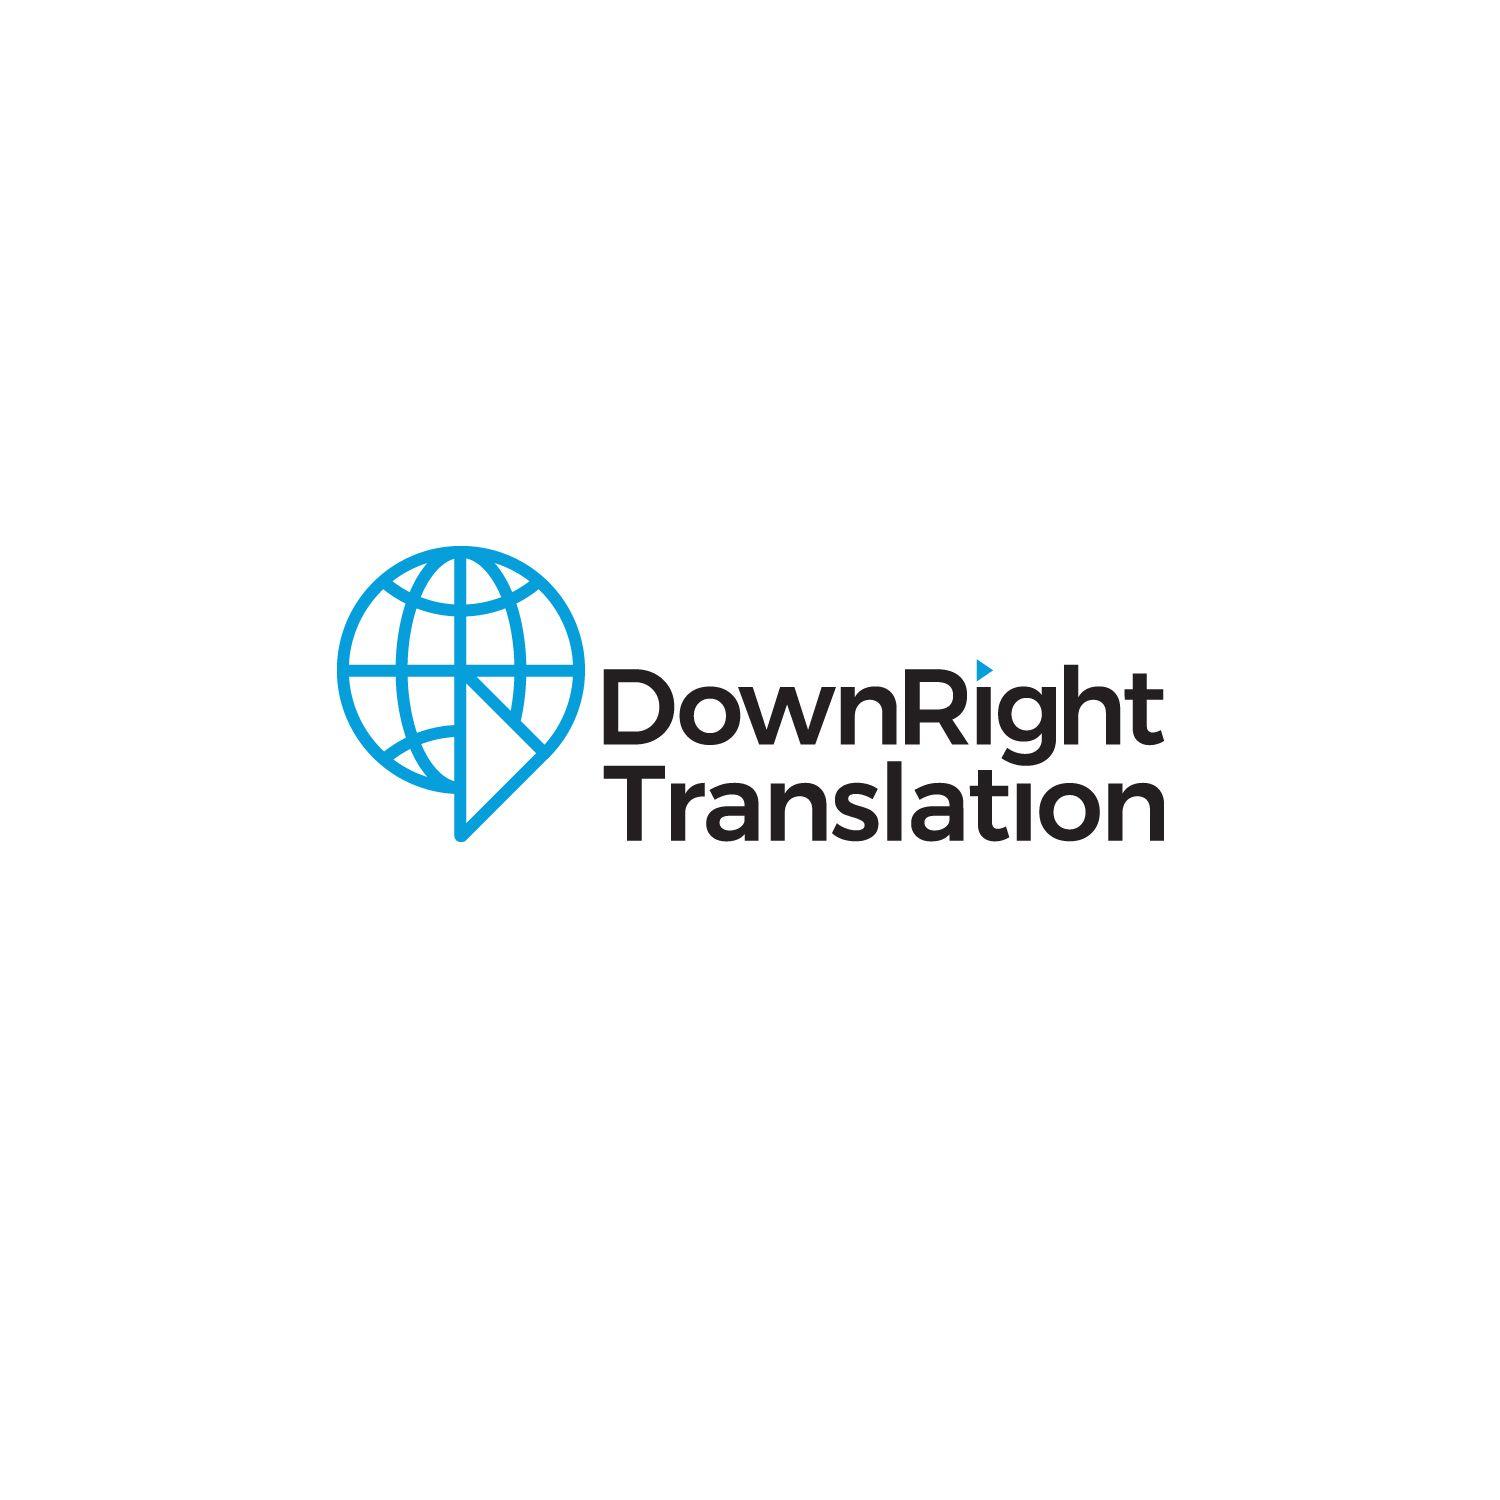 Translation Logo - Serious, Professional, Business Logo Design for DownRight ...